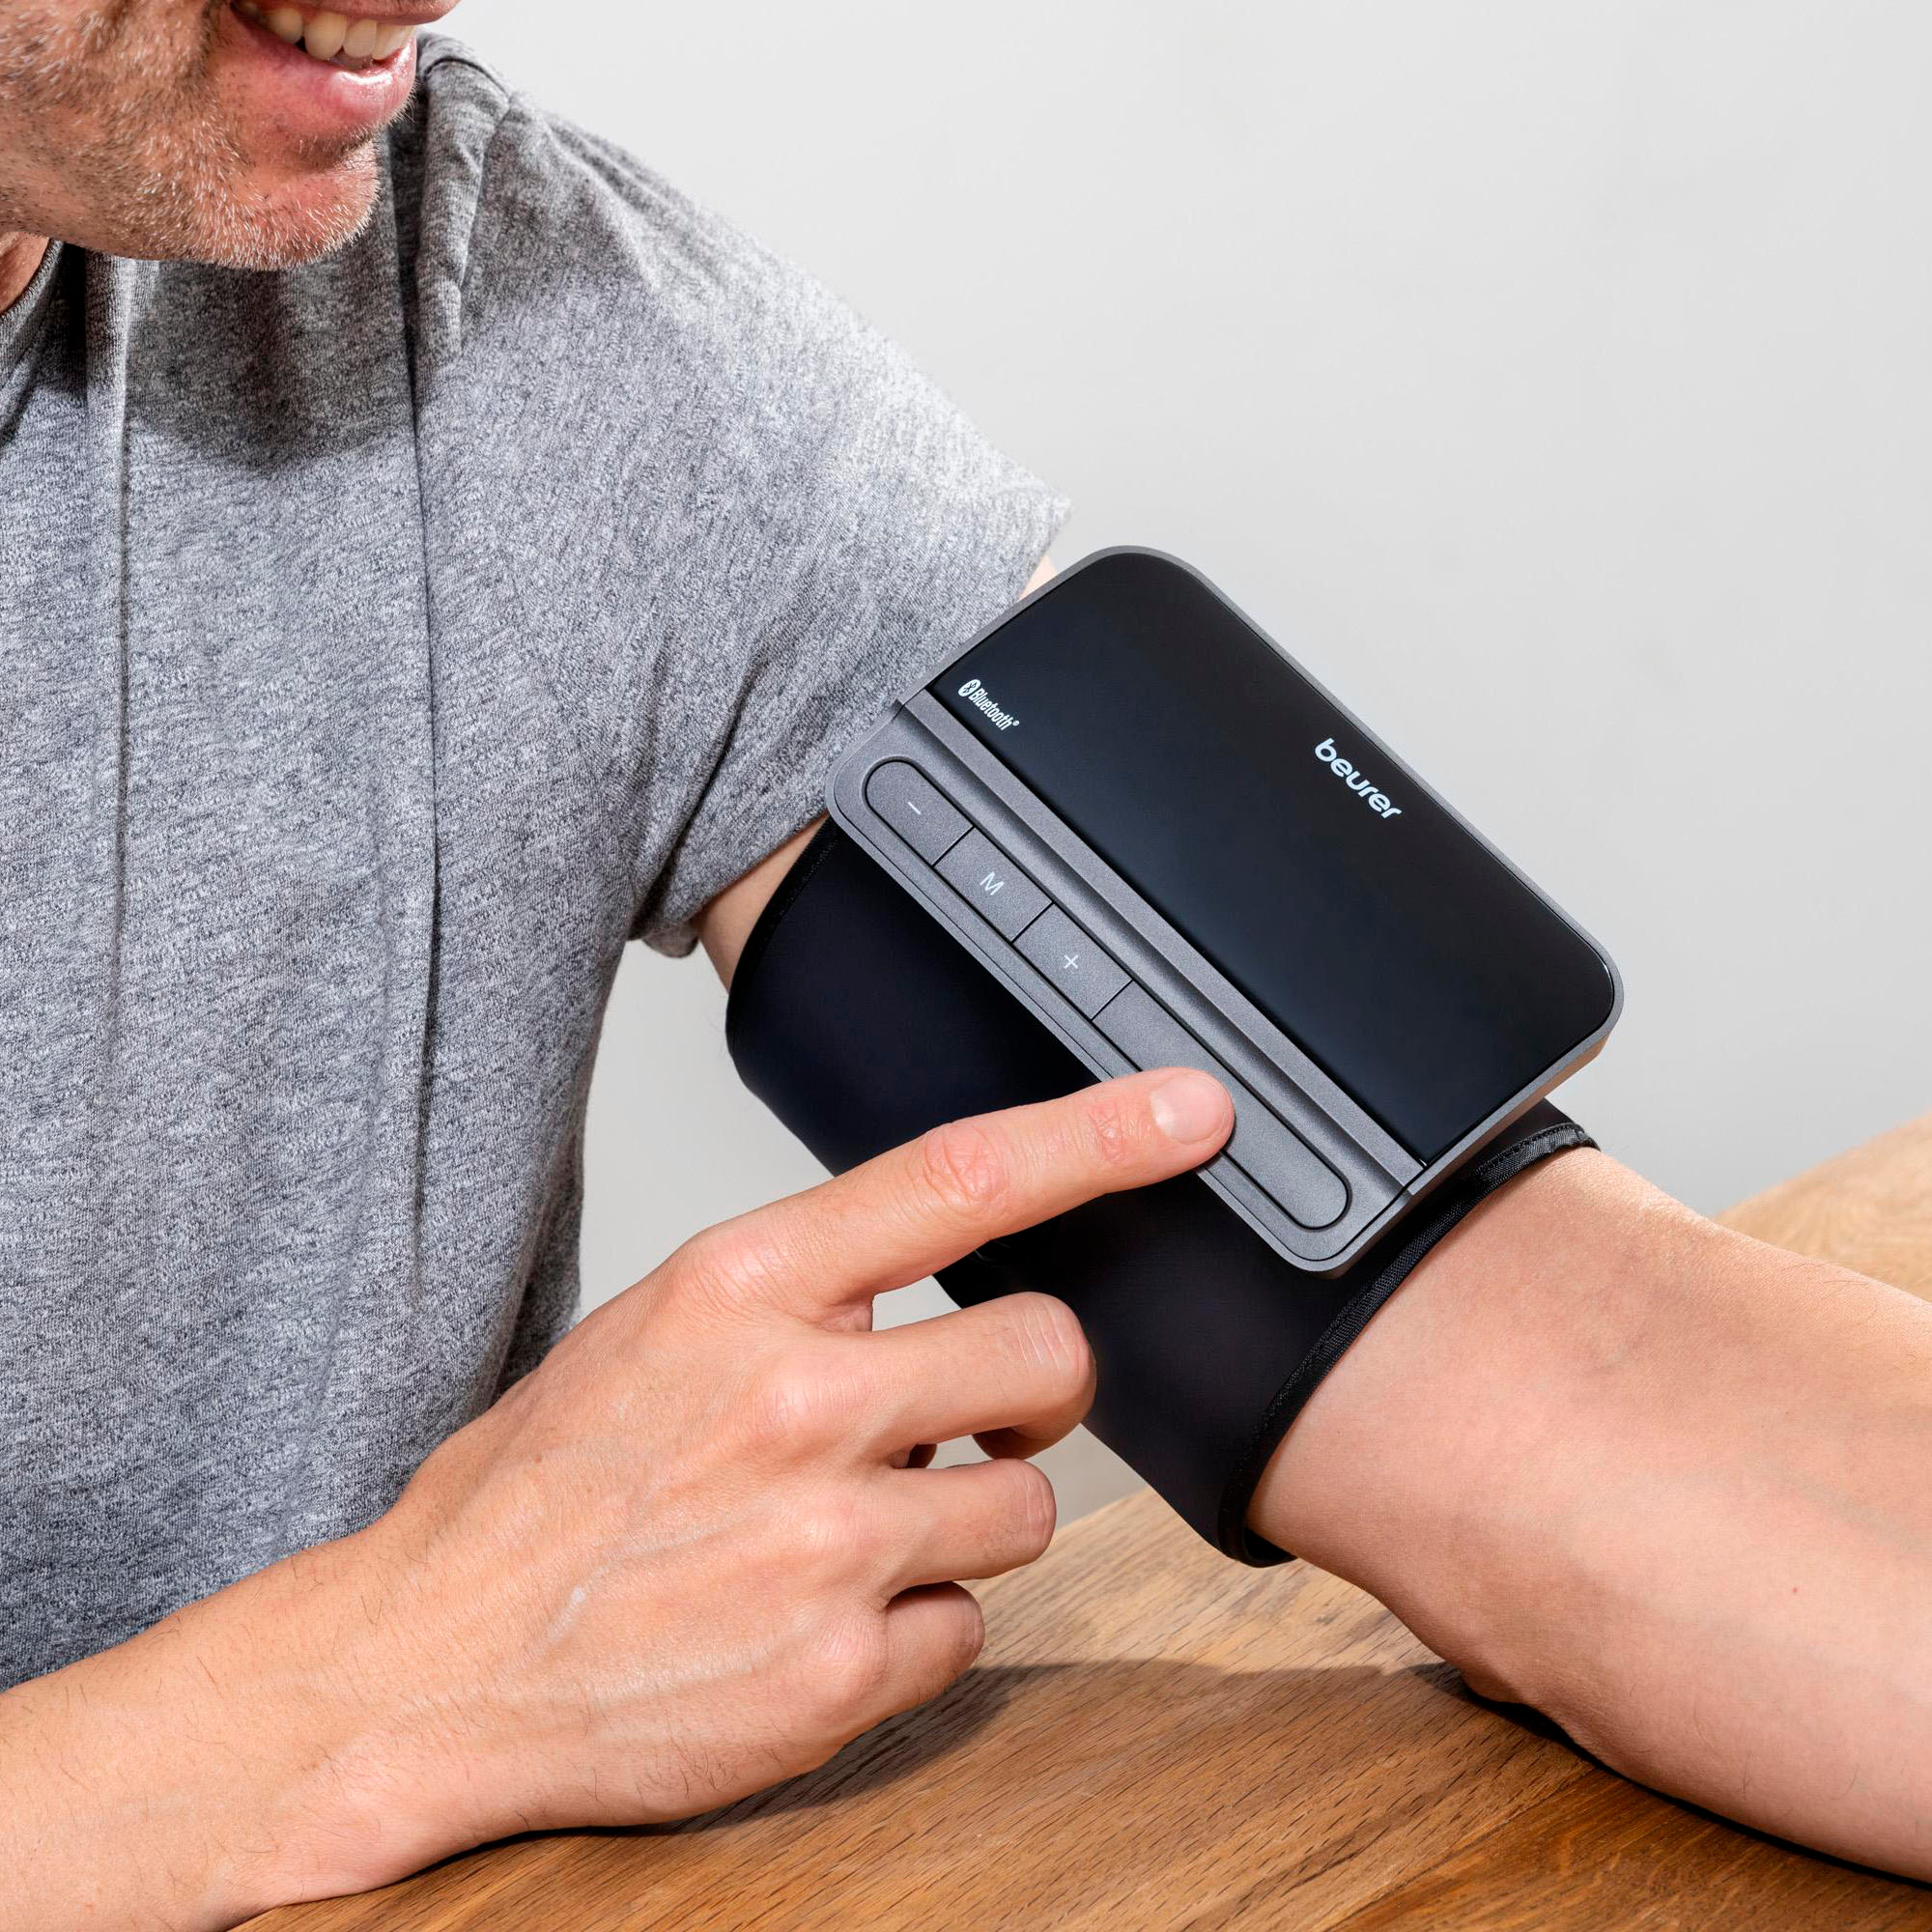 Beurer Bluetooth Wrist Blood Pressure Monitor Black BC54 - Best Buy